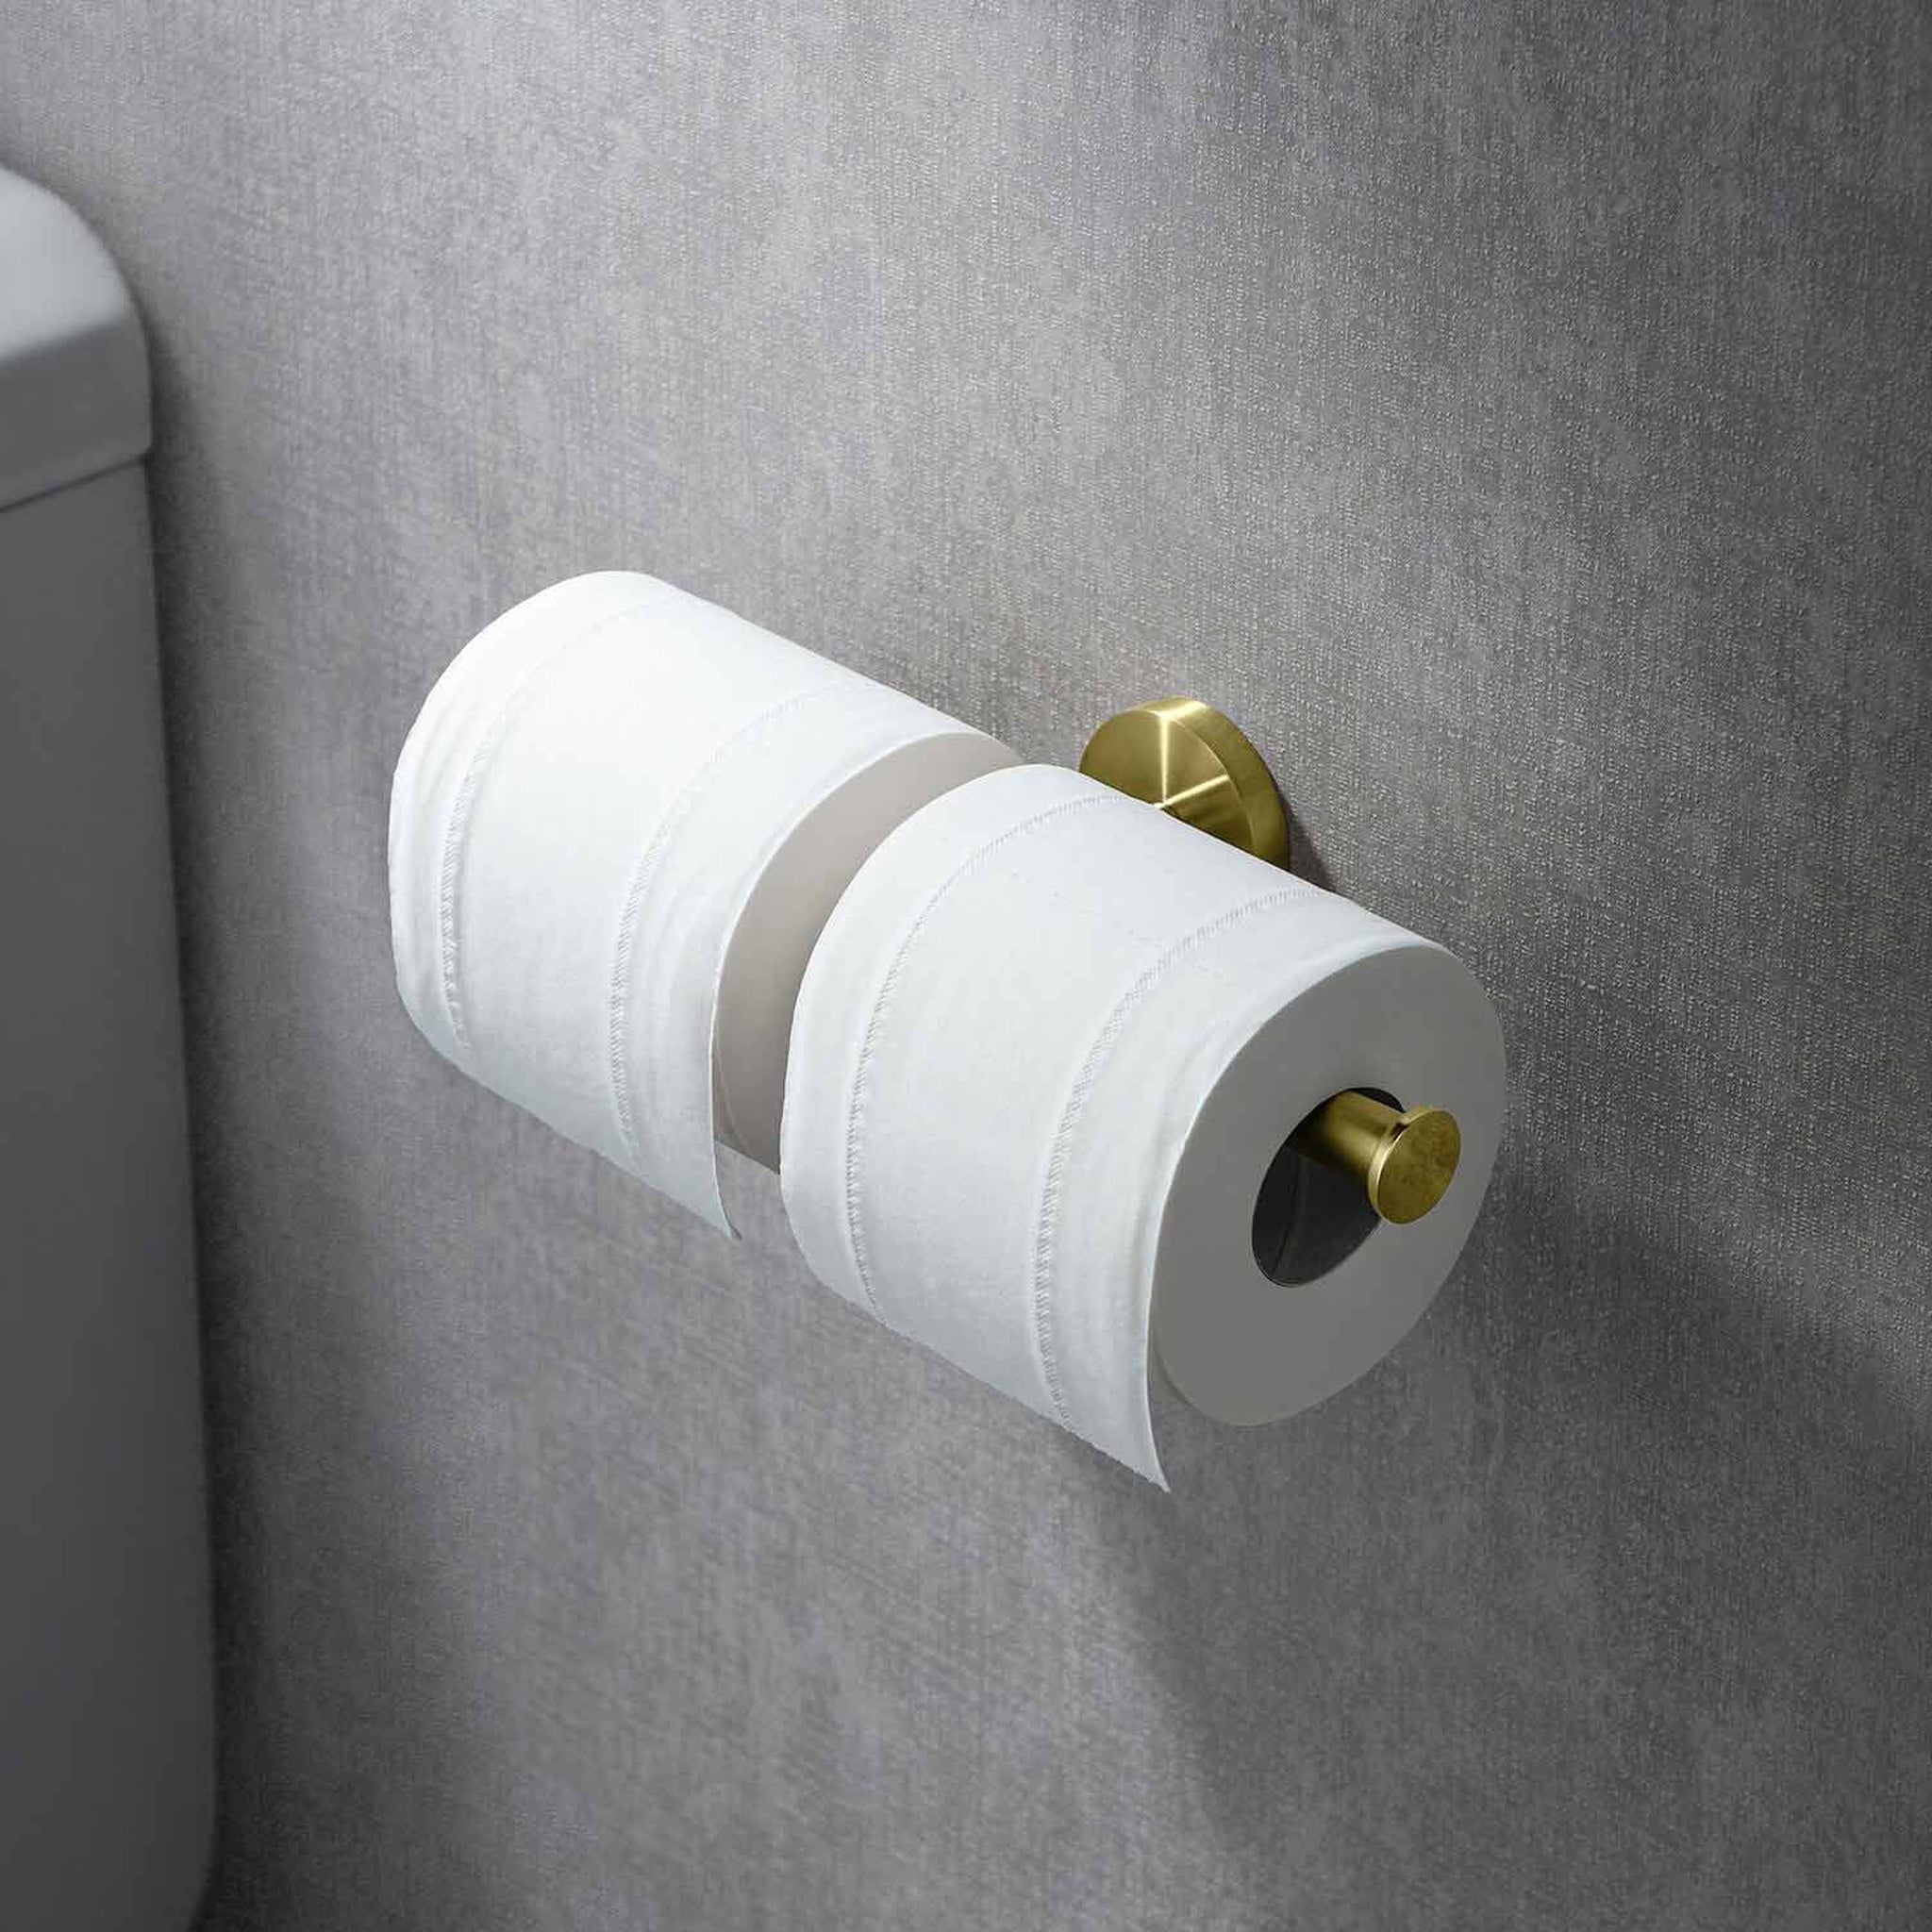 KIBI, KIBI Circular Brass Bathroom Double Toilet Paper Holder in Brushed Gold Finish